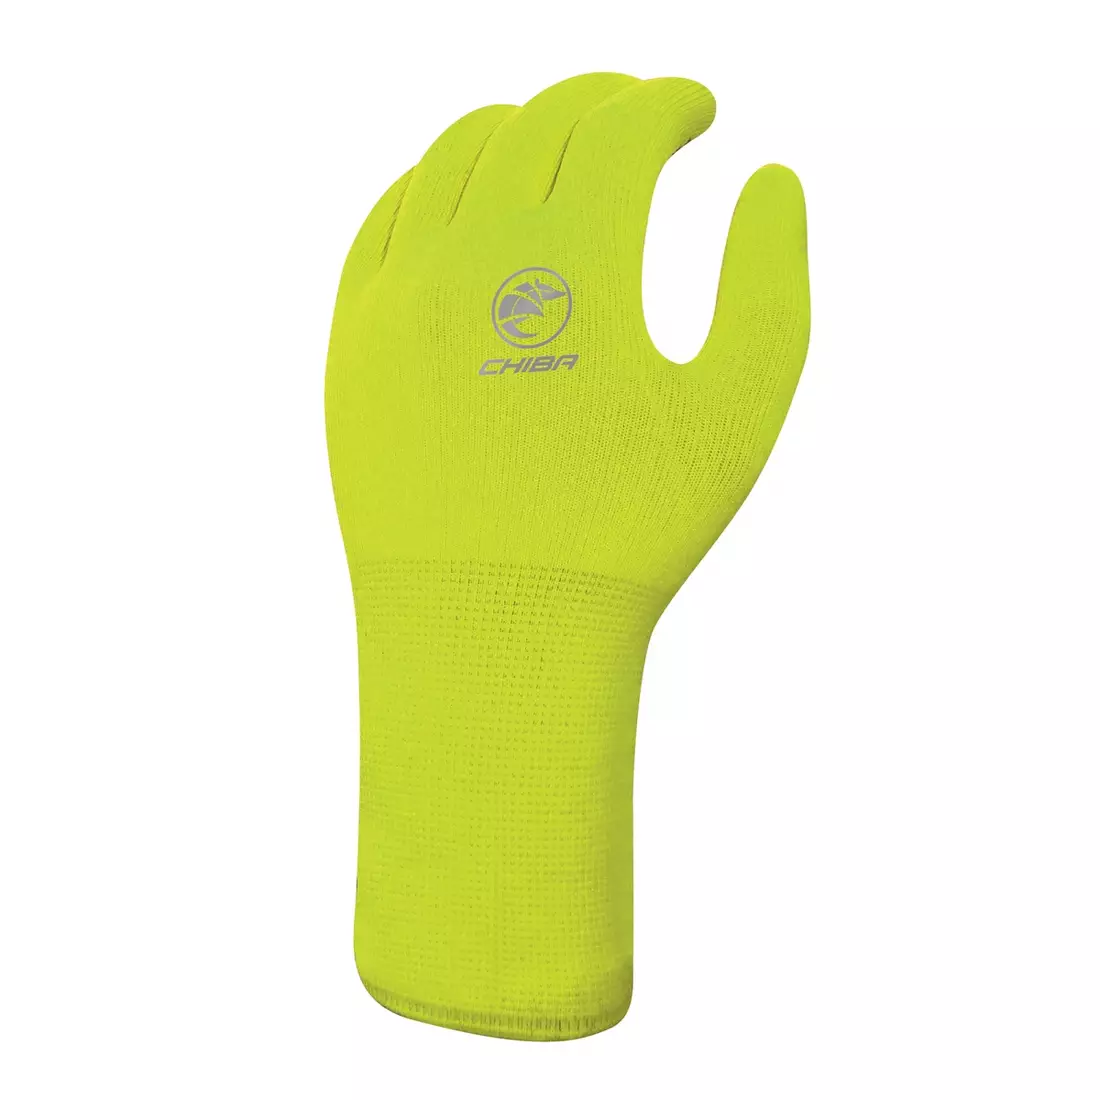 CHIBA Cycling gloves WATERSHIELD yellow 3150720Y-3